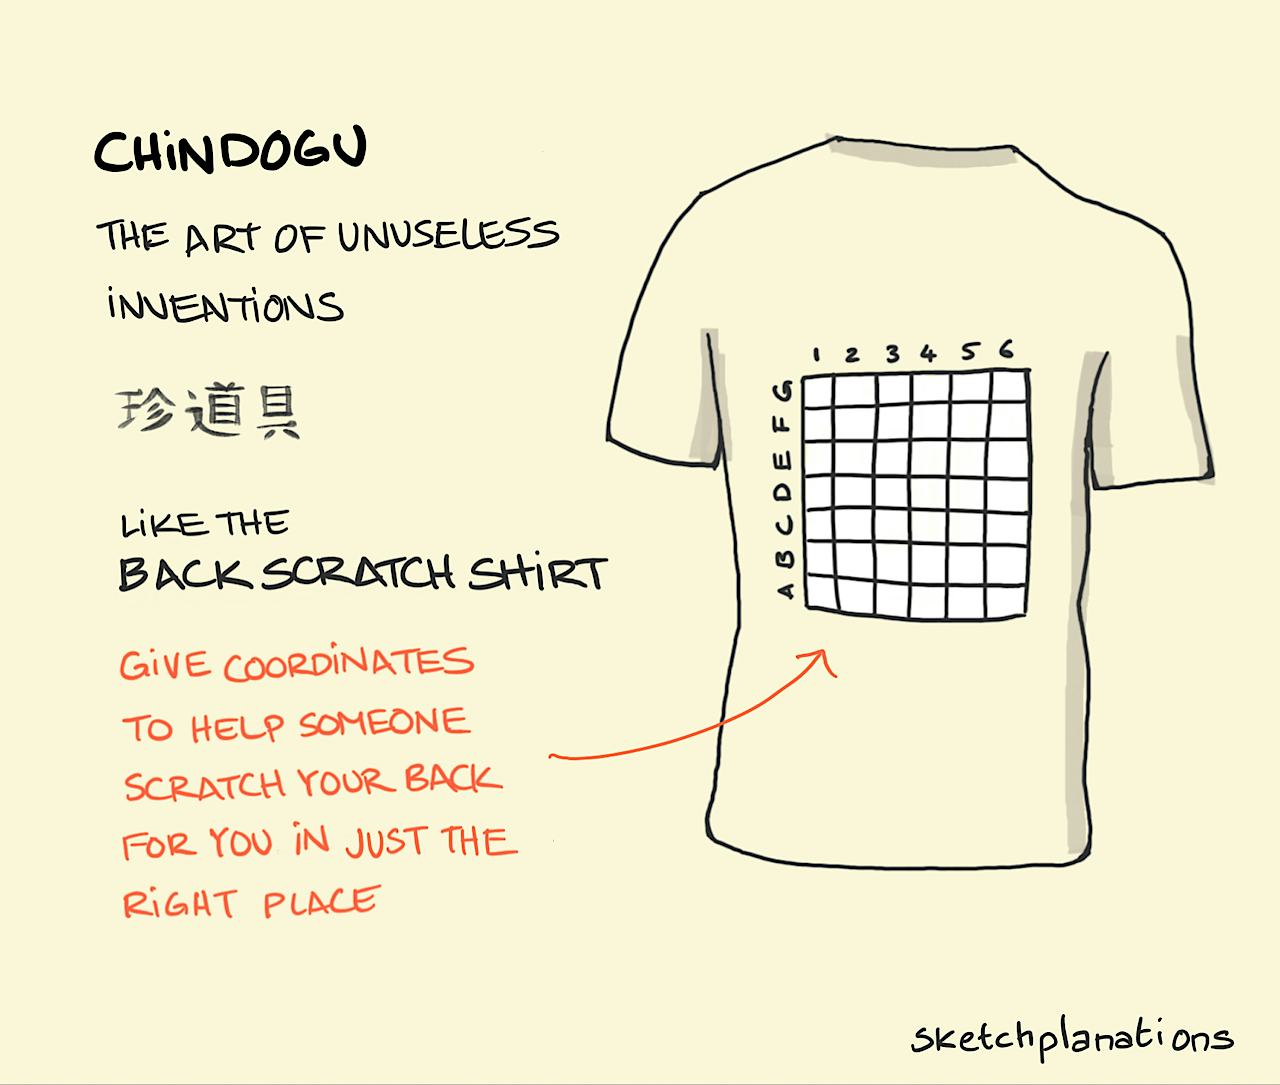 Chindogu - Sketchplanations